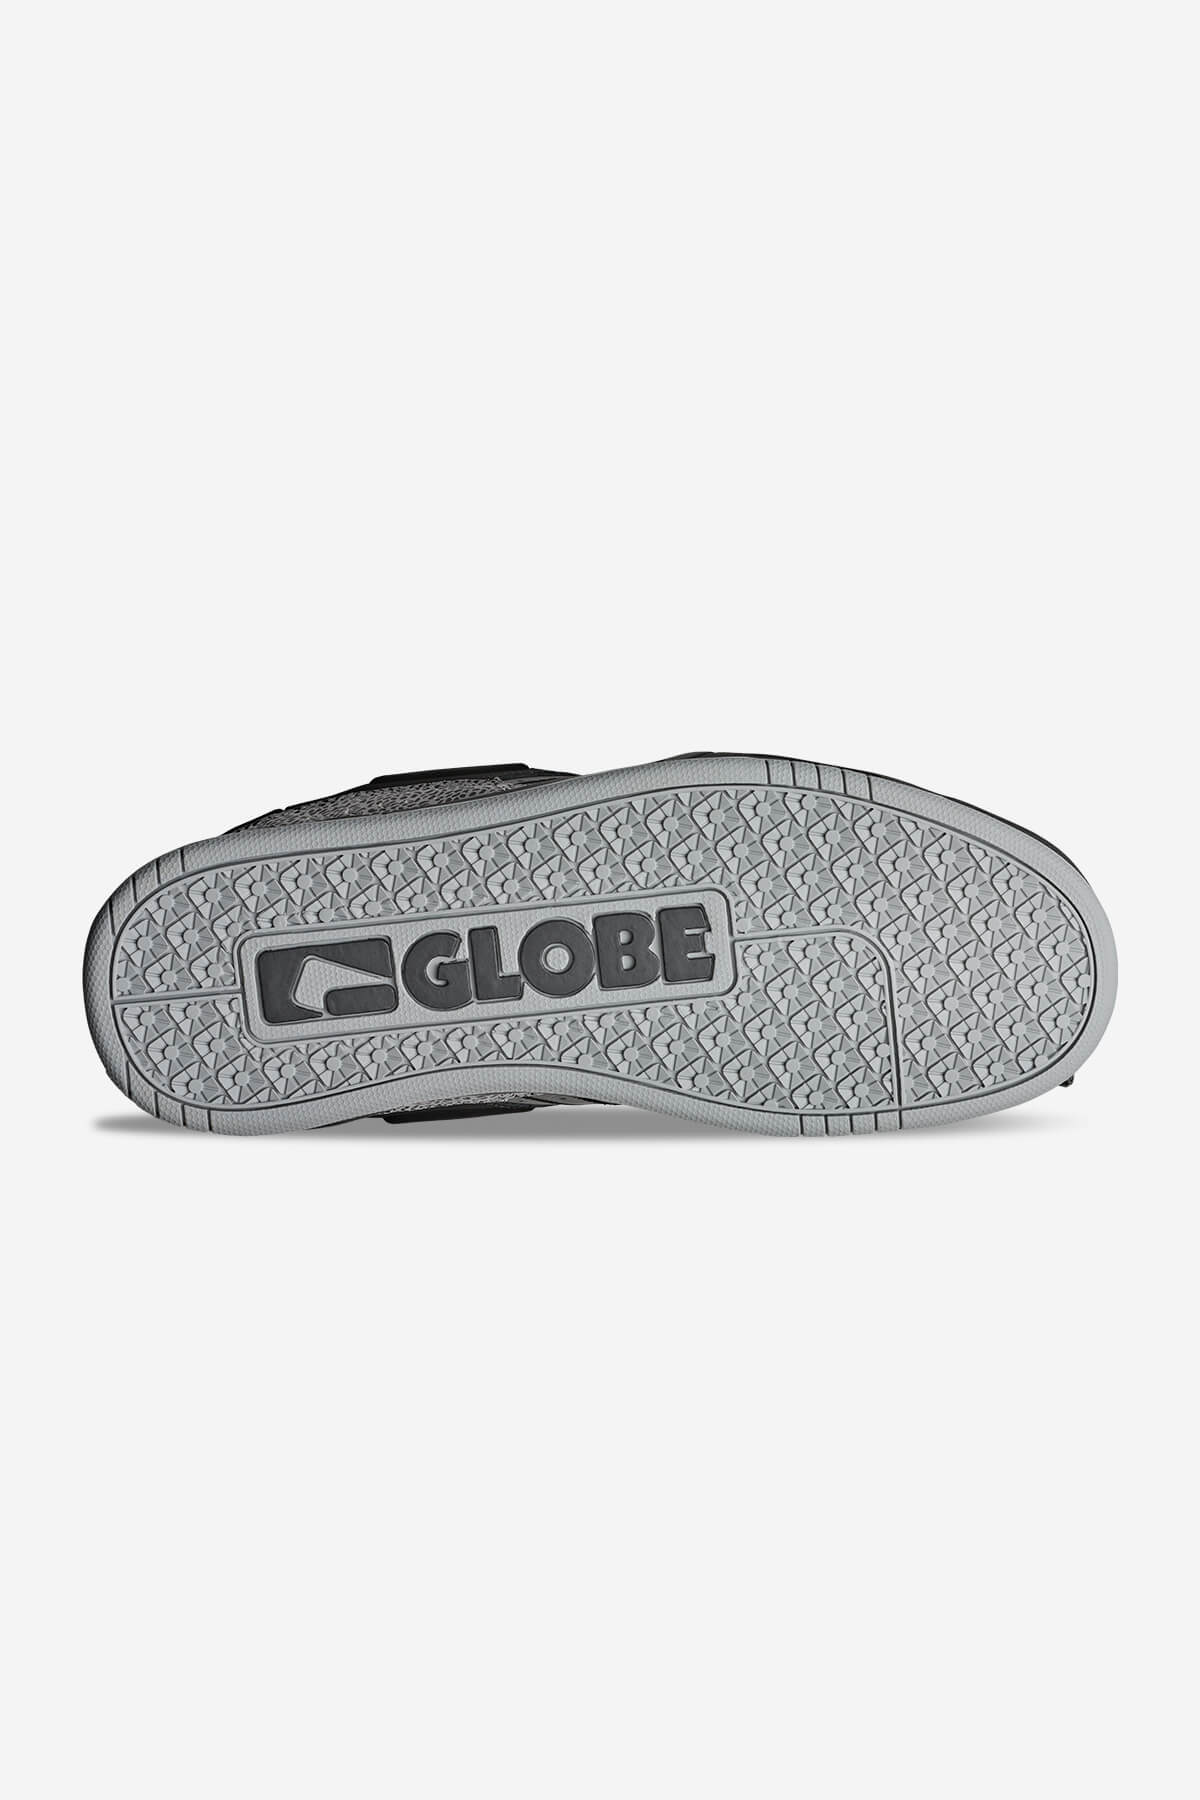 fusion black grey stipple skateboard shoes